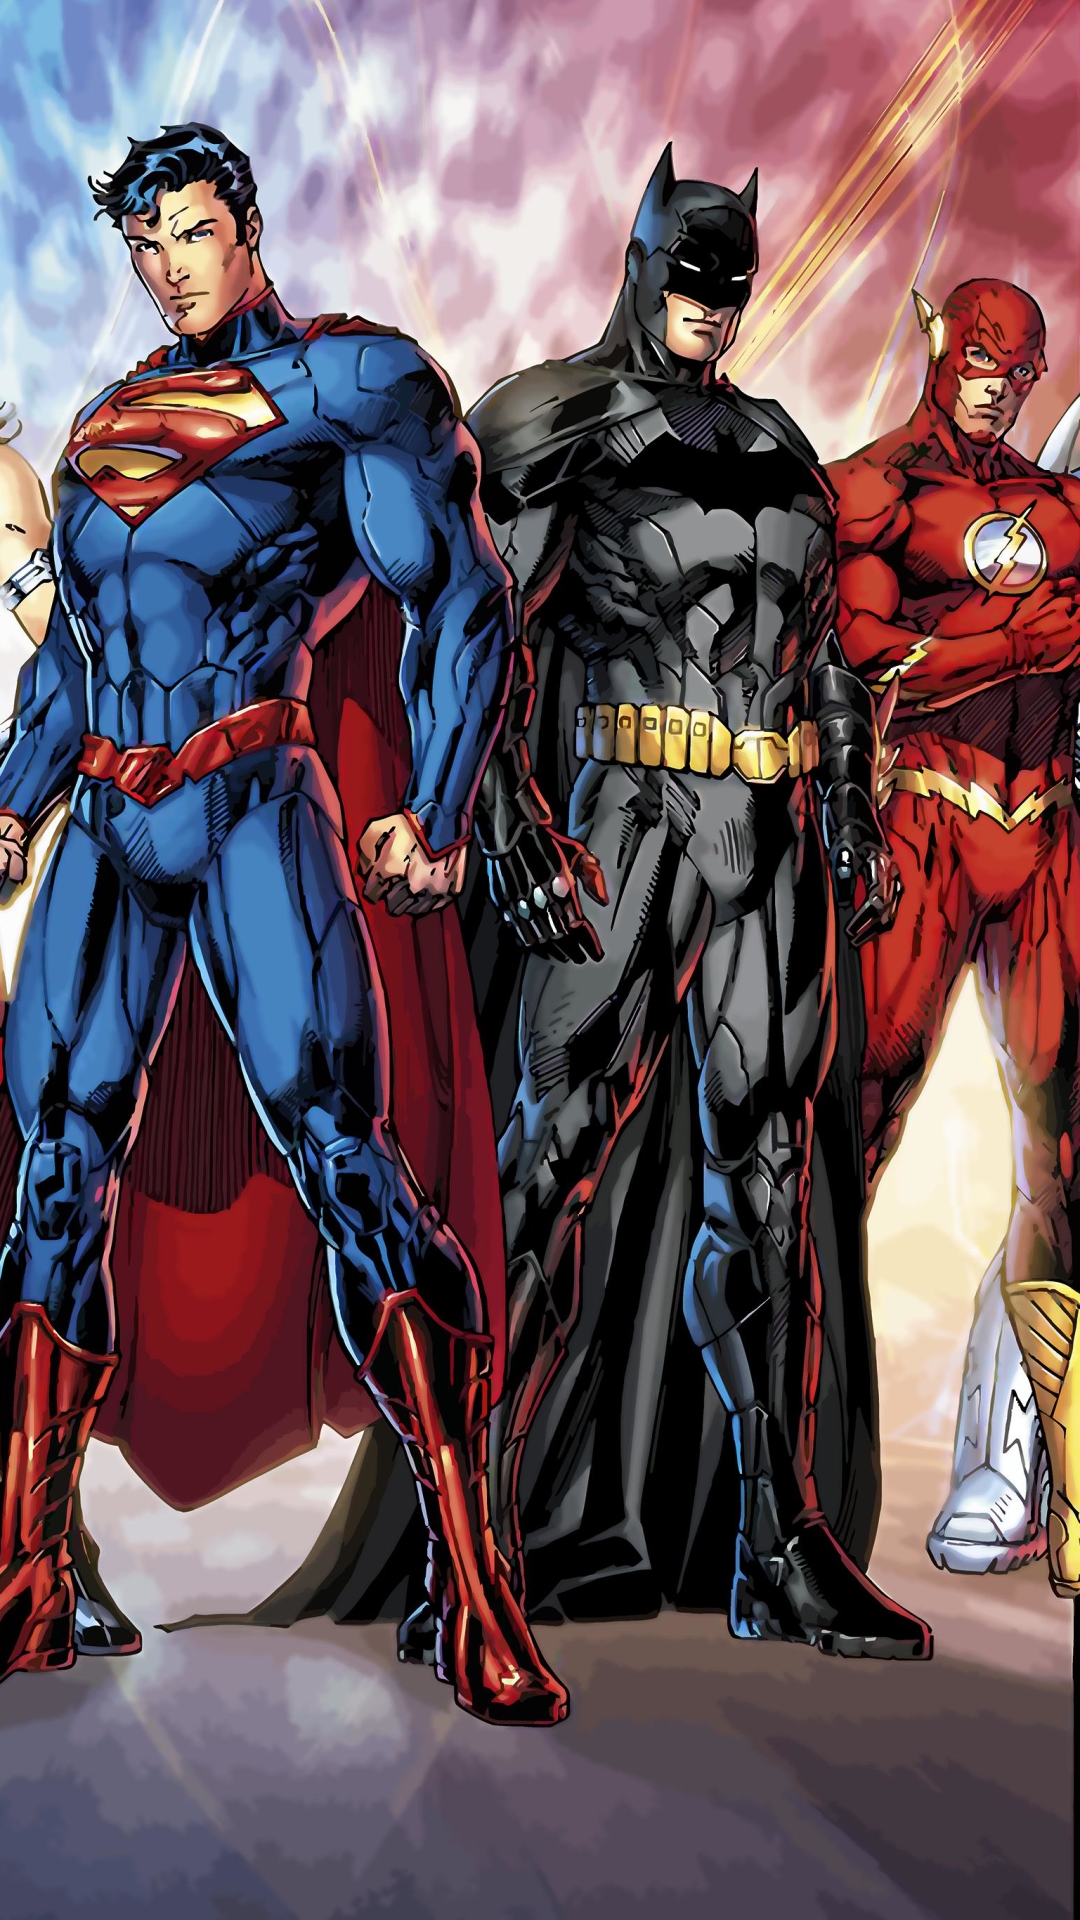 Descarga gratuita de fondo de pantalla para móvil de Superhombre, Destello, Historietas, Dc Comics, Hombre Murciélago, Liga De La Justicia, Barry Allen, Bruce Wayne.